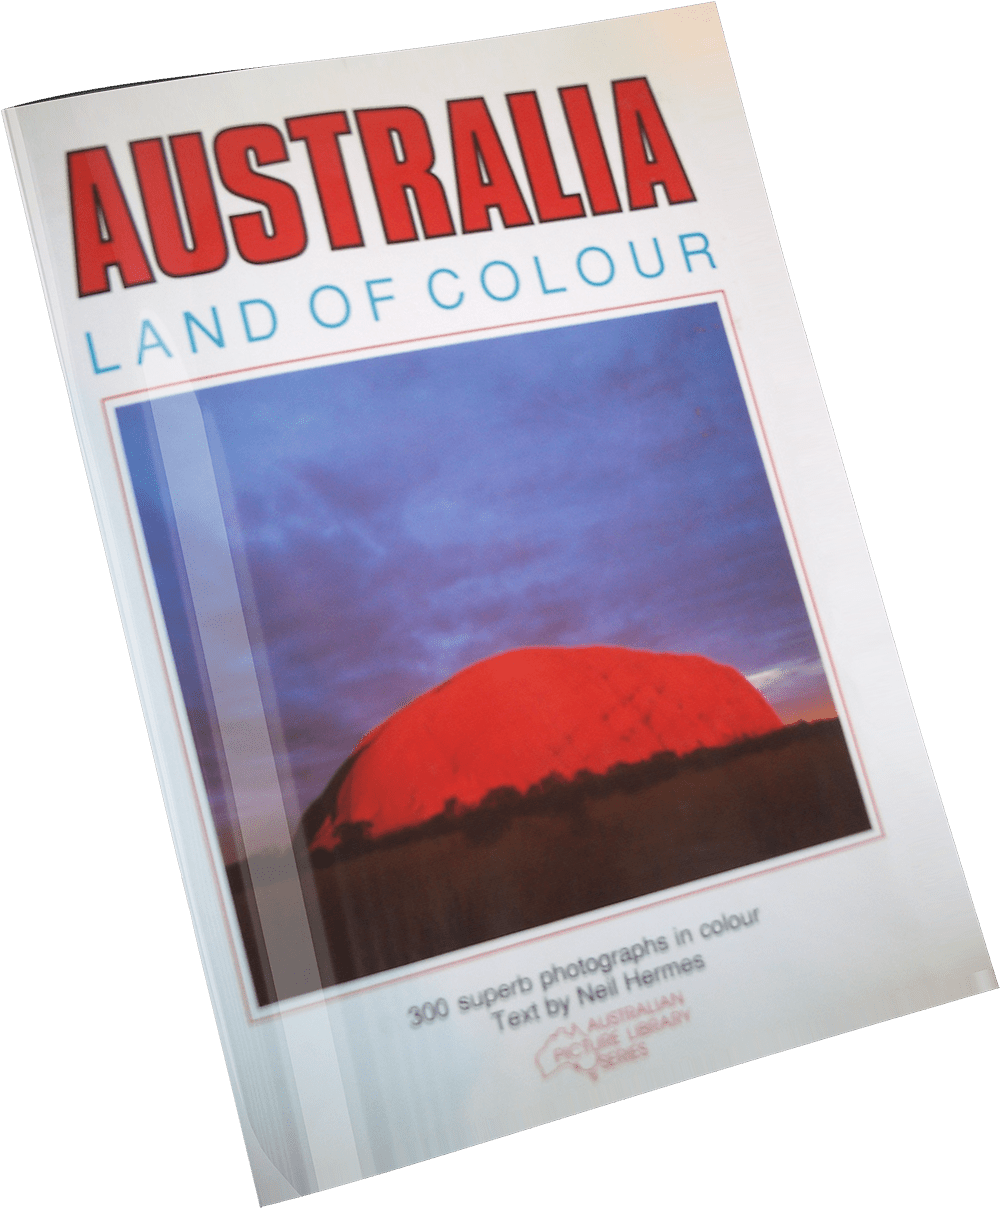 Neil Hermes Book: Australia: Land of Colour (Australian Picture Library Series)